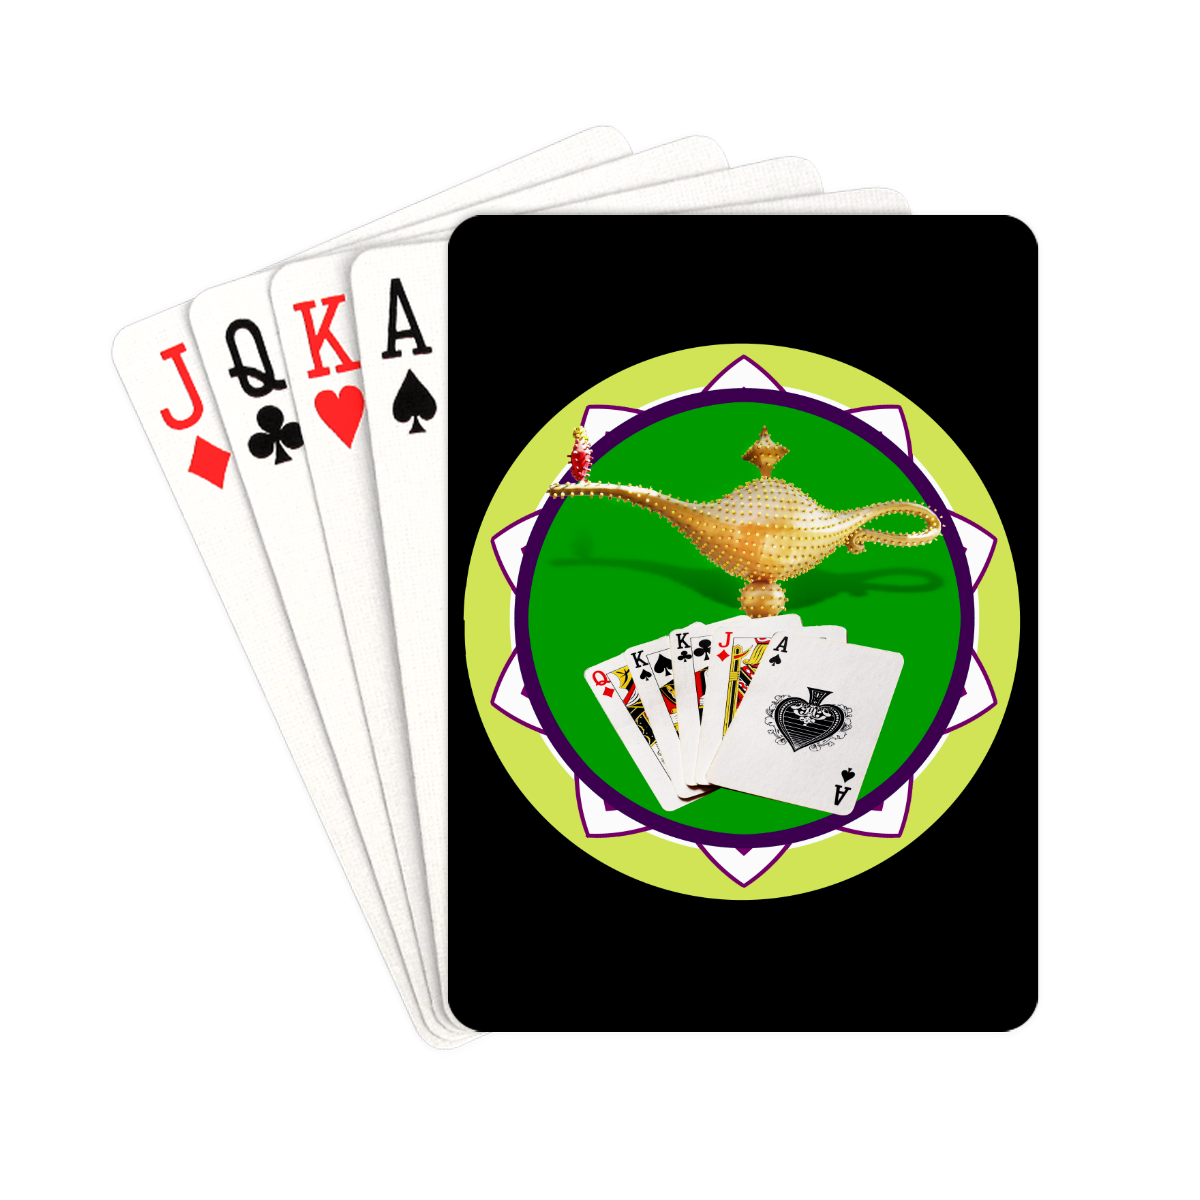 LasVegasIcons Poker Chip - Magic Lamp on Black Playing Cards 2.5"x3.5"